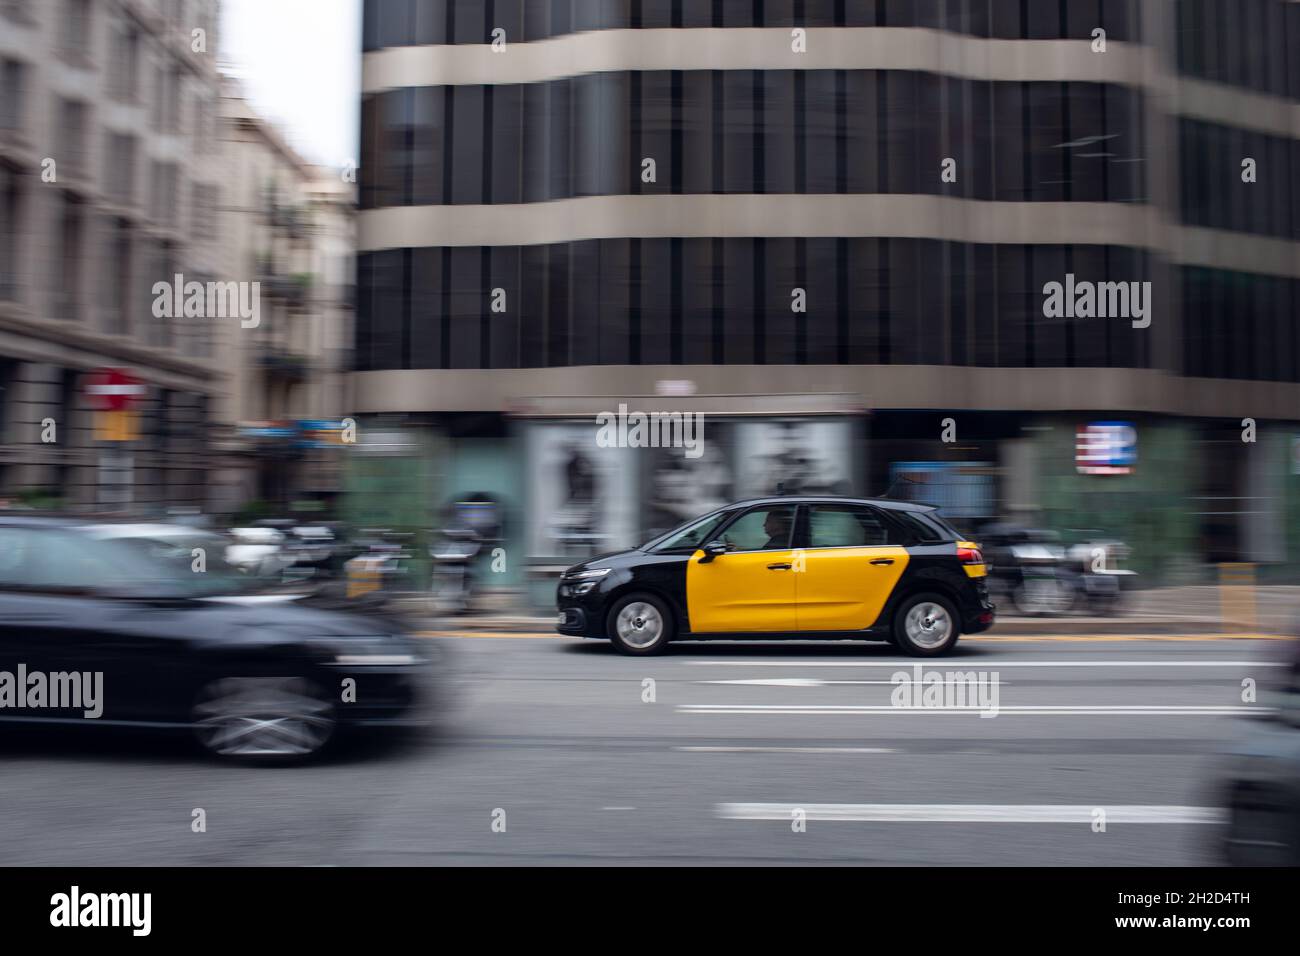 Barcelona, Spain - September 22, 2021: A Barcelona city taxi driving on Via laietana. Stock Photo